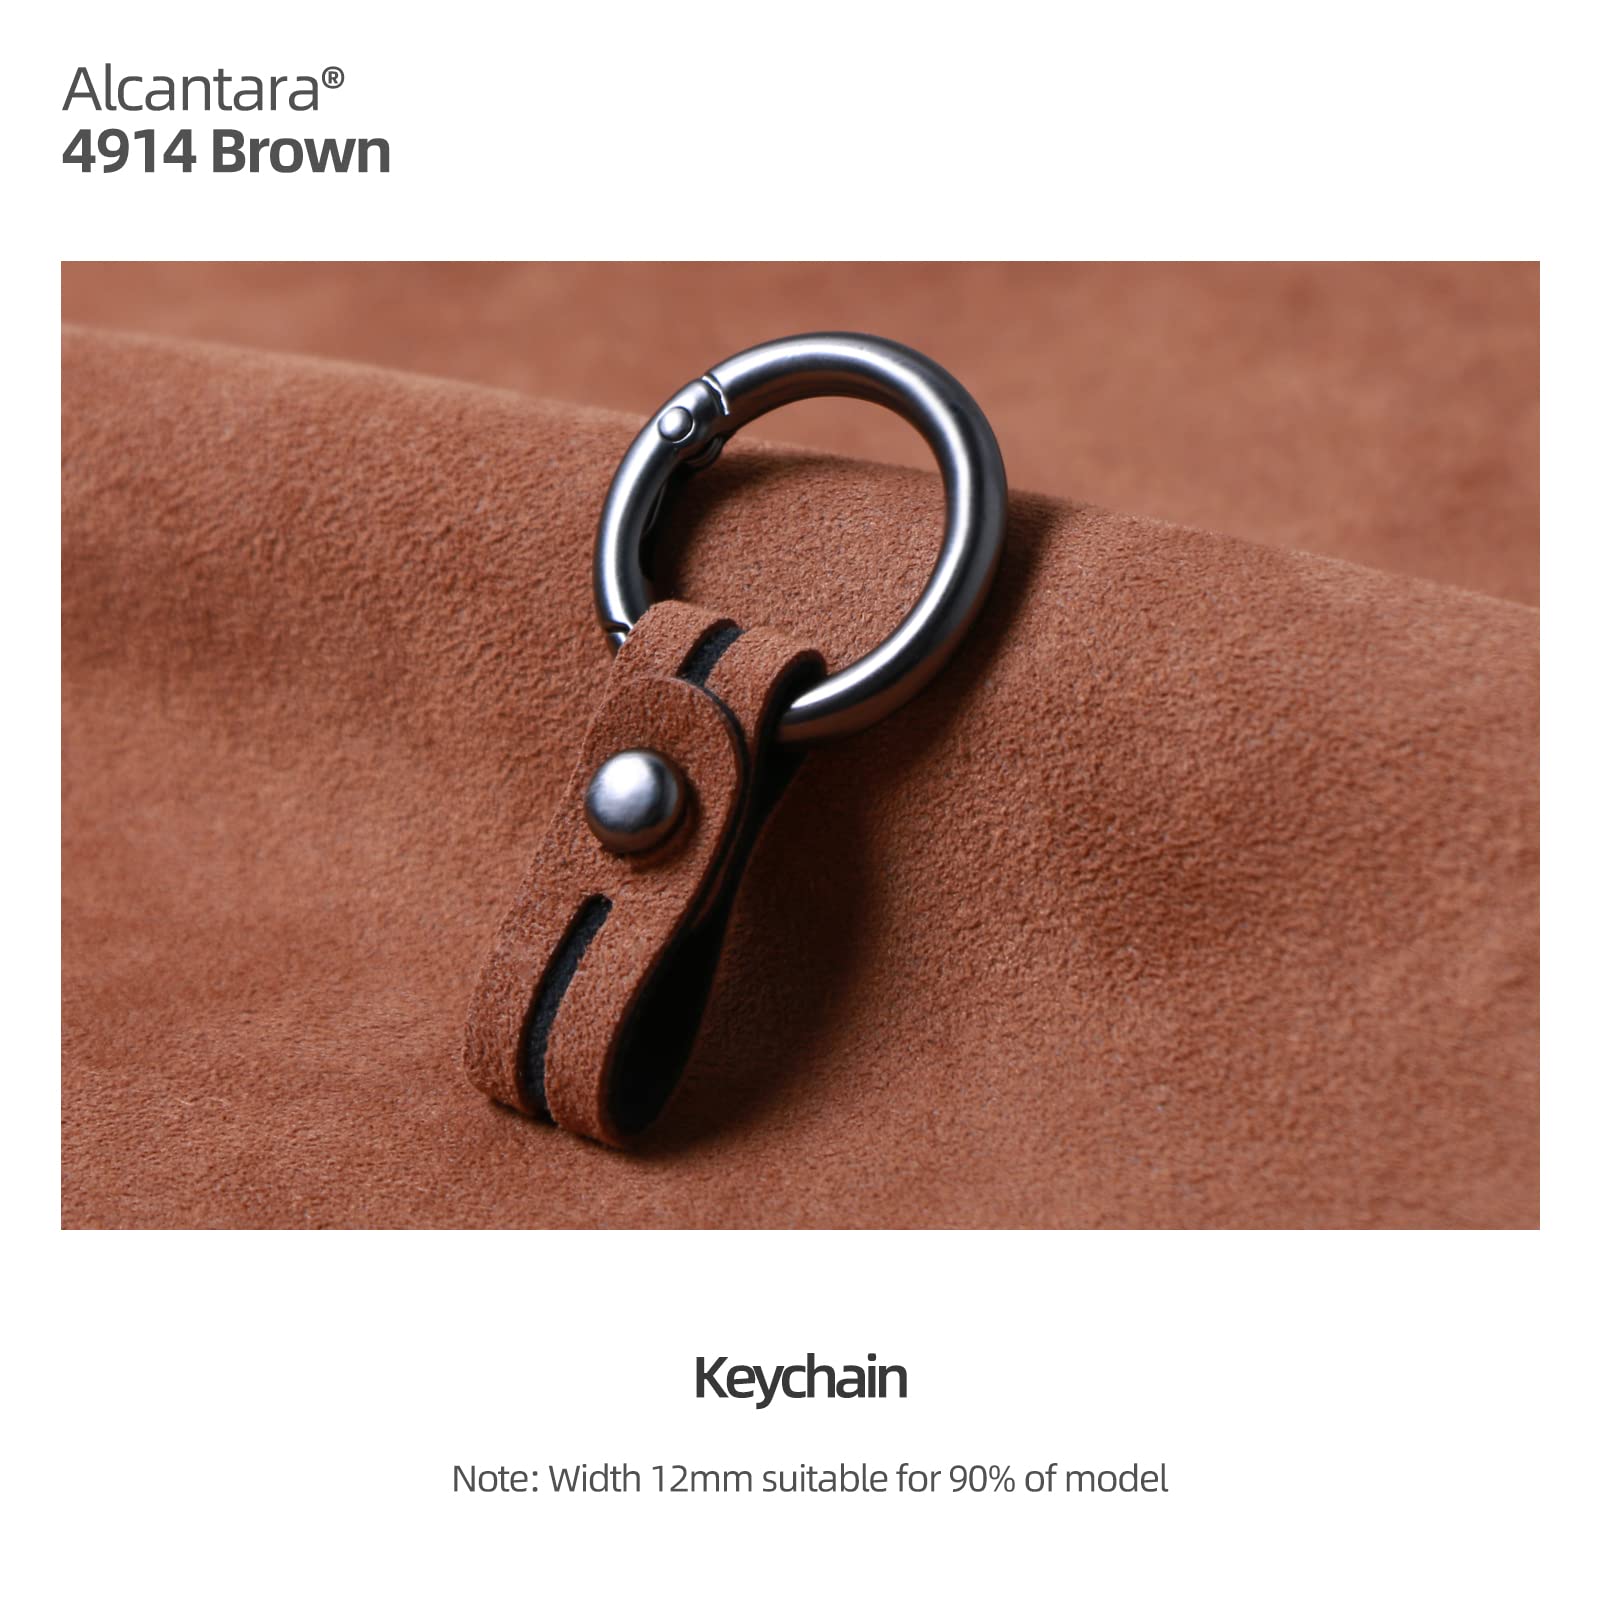 BETTERHUMZ Alcantara leather Keychain, Car Key Lanyard for Car Fob & Home Keys, Carabineer Clip, Keyrings,Accessories (Brown)